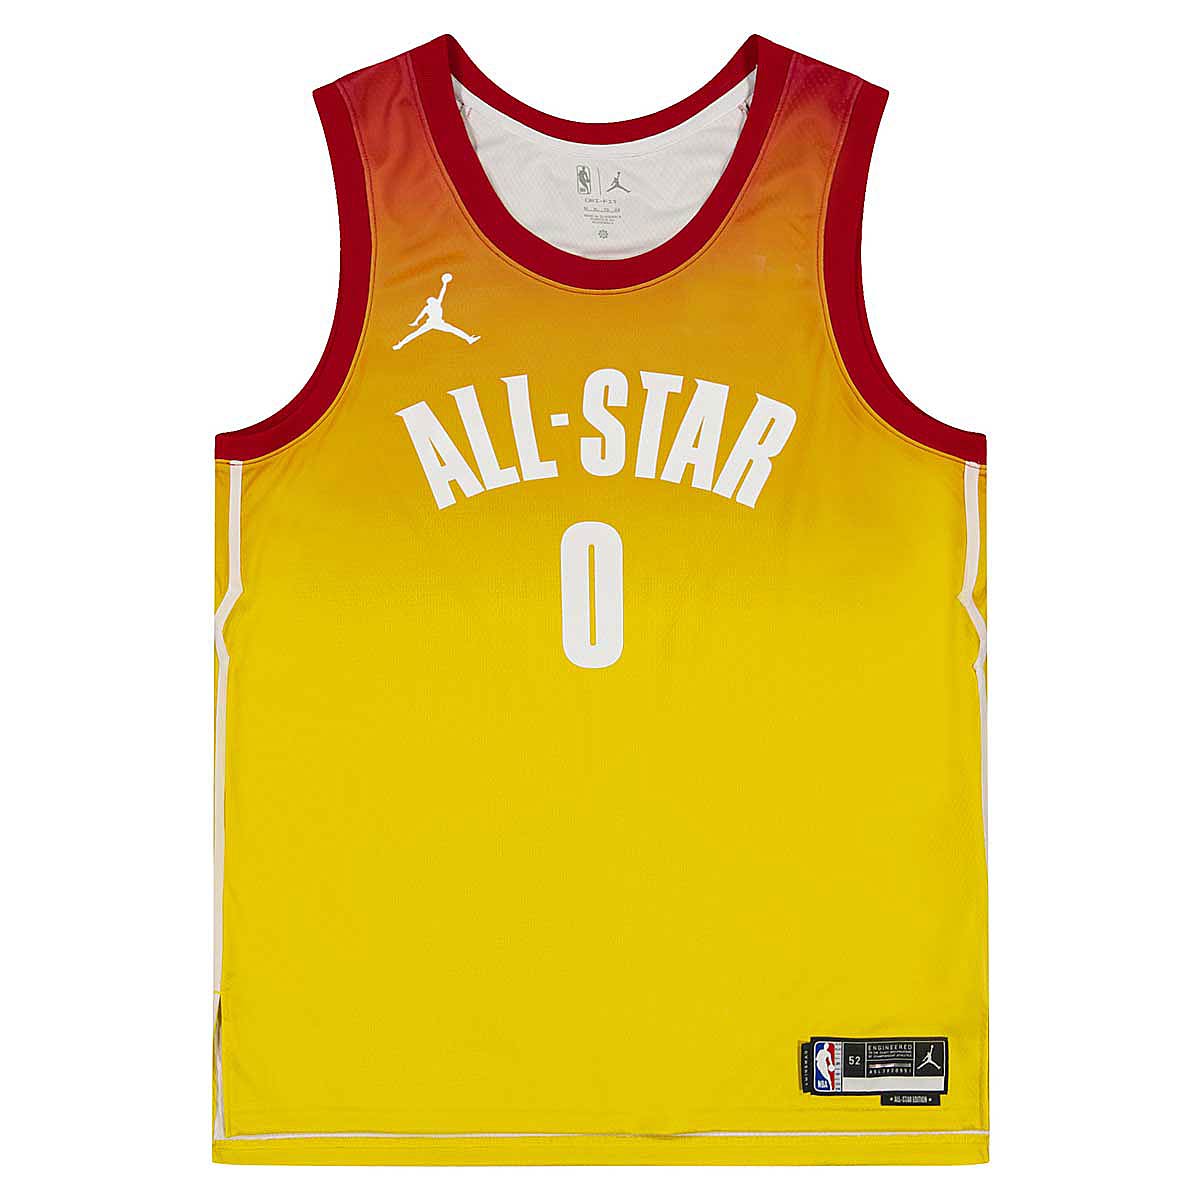 Fanatics releases NBA All-Star gear: Jerseys, hoodies, shirts and